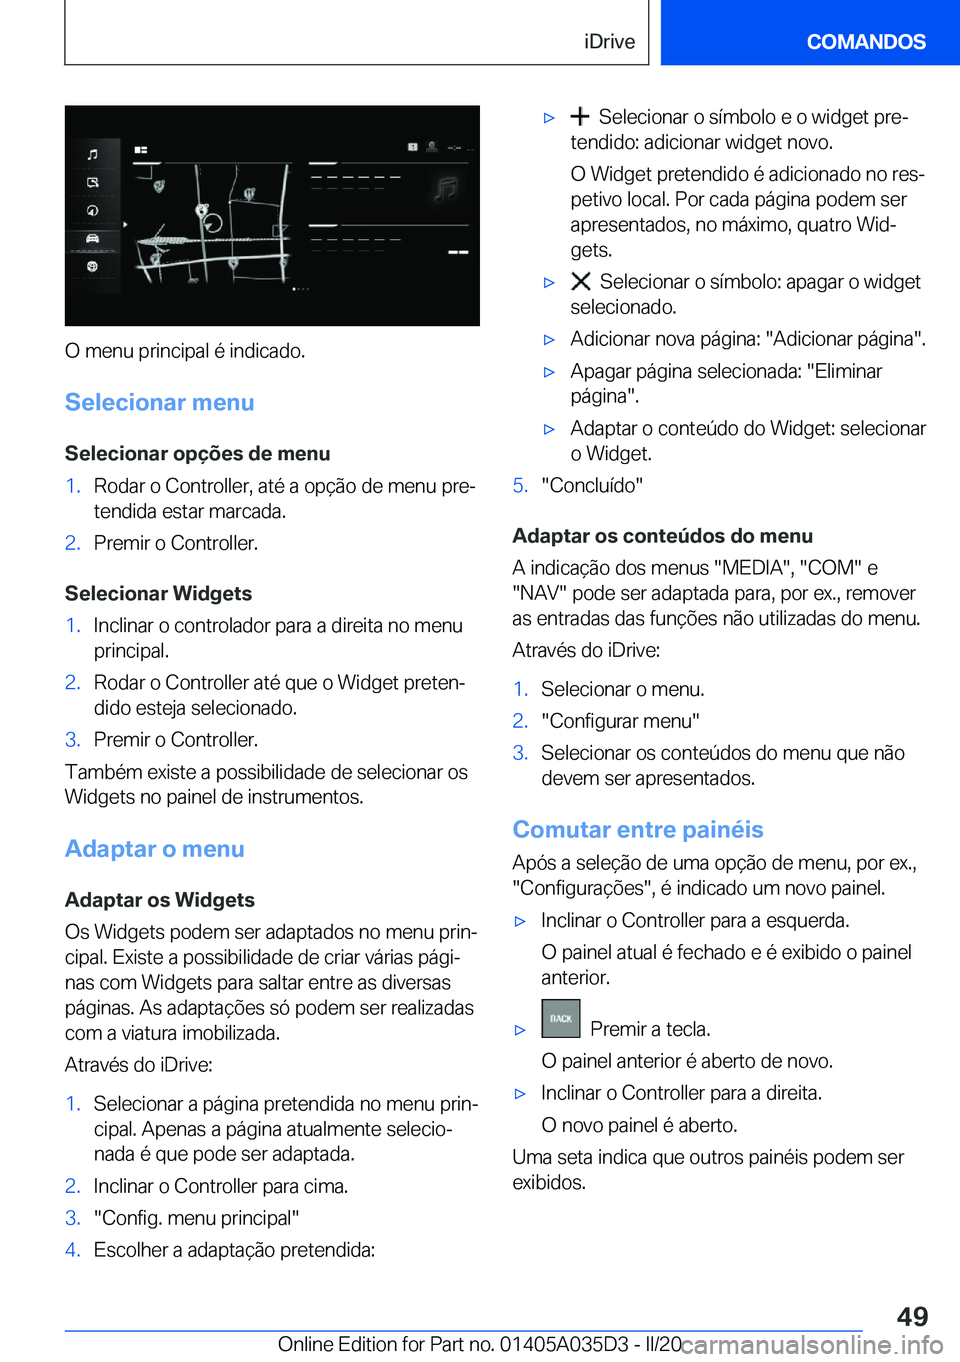 BMW X4 2020  Manual do condutor (in Portuguese) �O��m�e�n�u��p�r�i�n�c�i�p�a�l��é��i�n�d�i�c�a�d�o�.�S�e�l�e�c�i�o�n�a�r��m�e�n�u
�S�e�l�e�c�i�o�n�a�r��o�p�